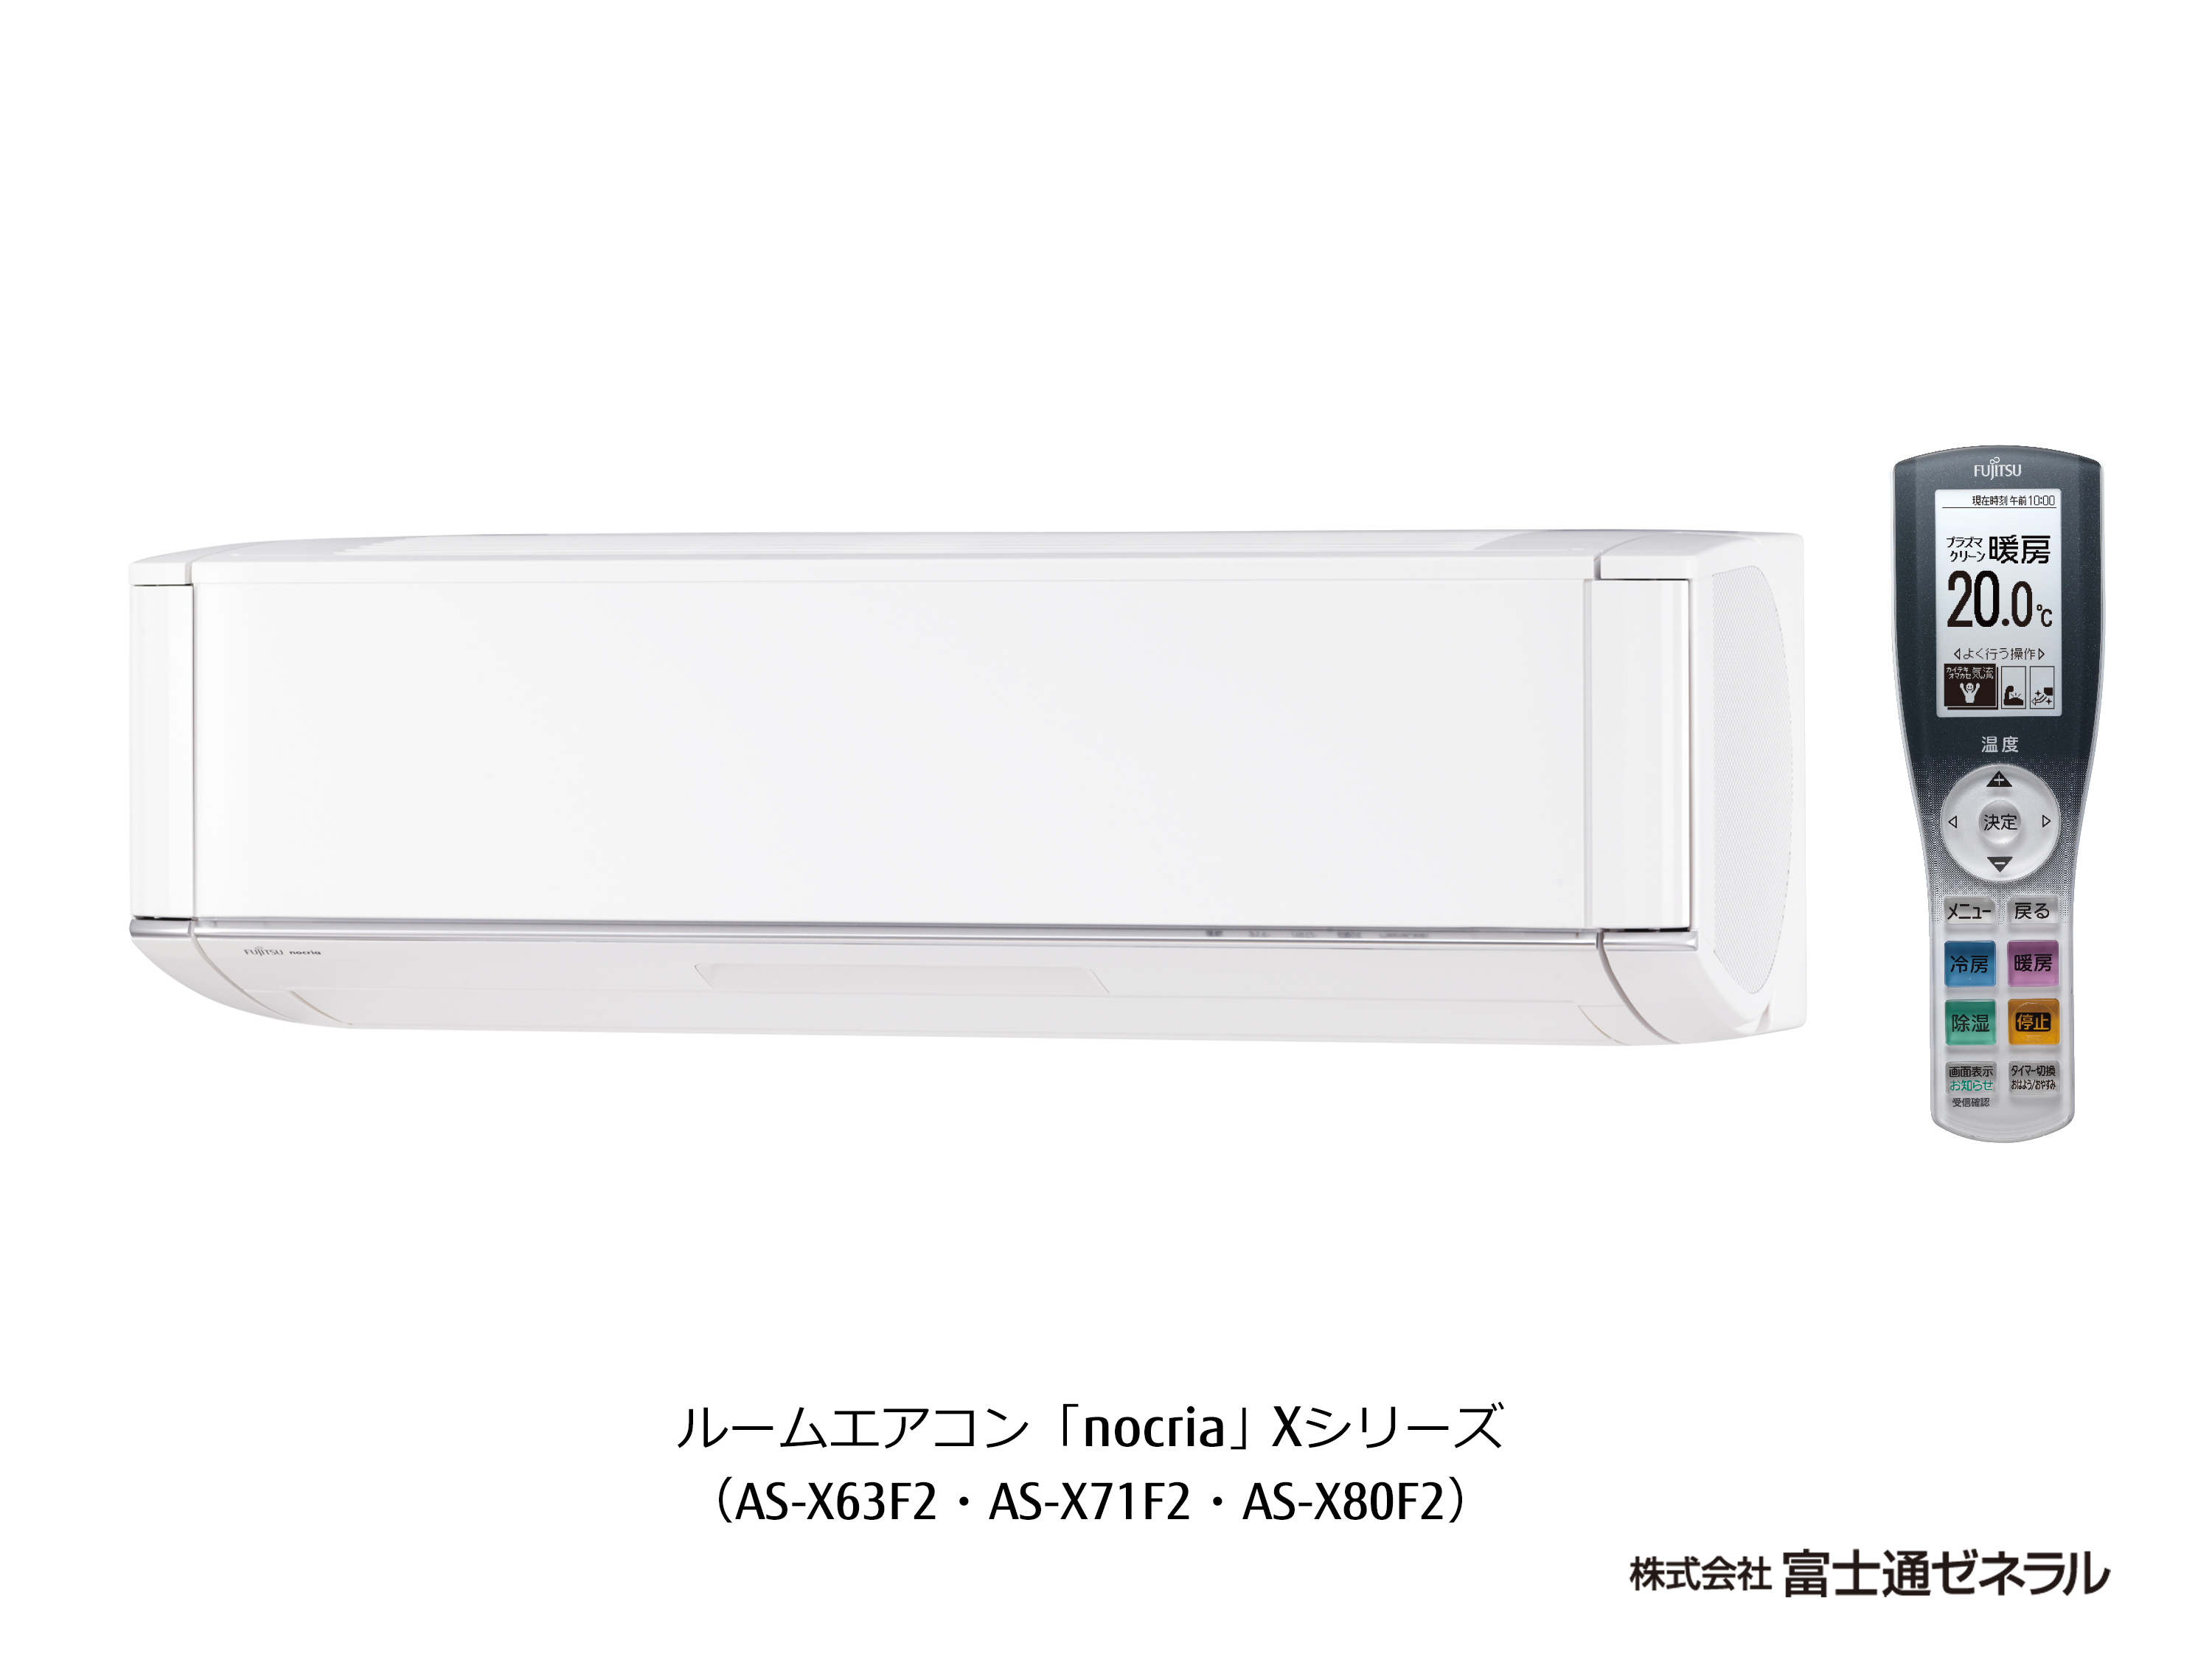 AS-X71F2 概要 2016年 エアコン nocria®X シリーズ - 富士通ゼネラル JP